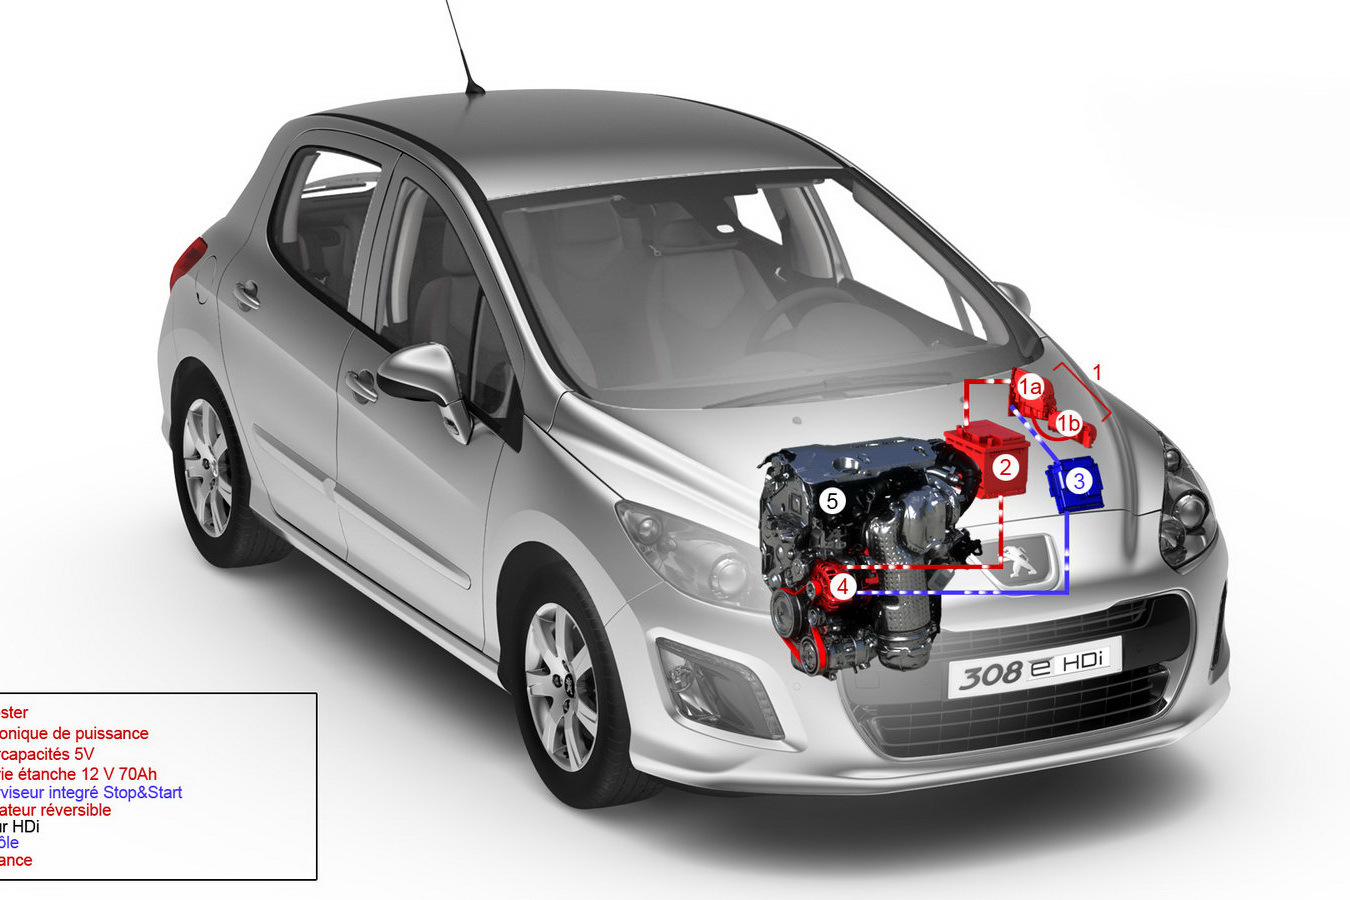 Versiunea Peugeot 308 1,6 e-HDI anunta un consum mediu de 3,8 litri/100 km